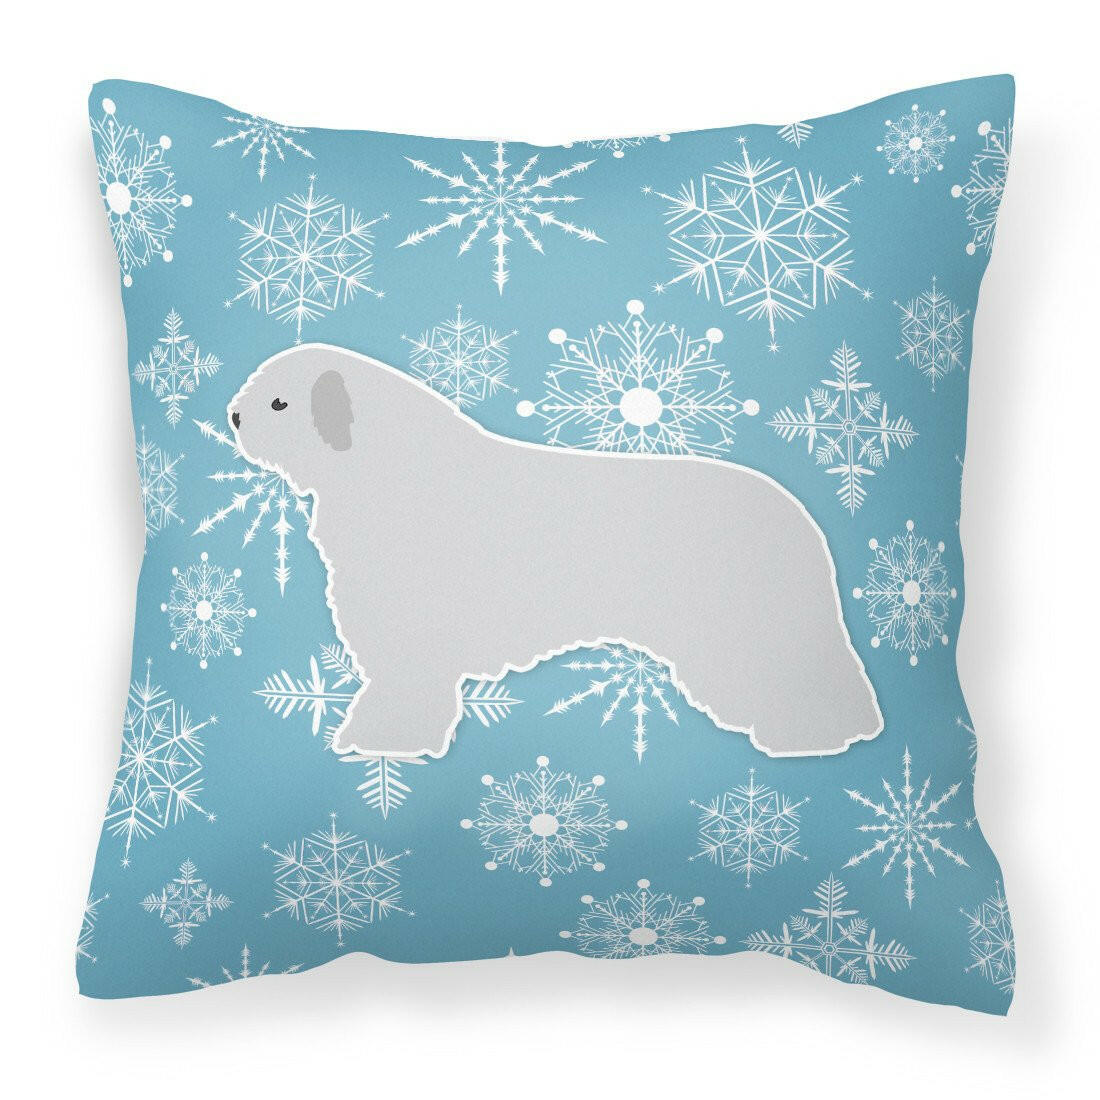 Winter Snowflake Spanish Water Dog Fabric Decorative Pillow BB3515PW1818 by Caroline's Treasures